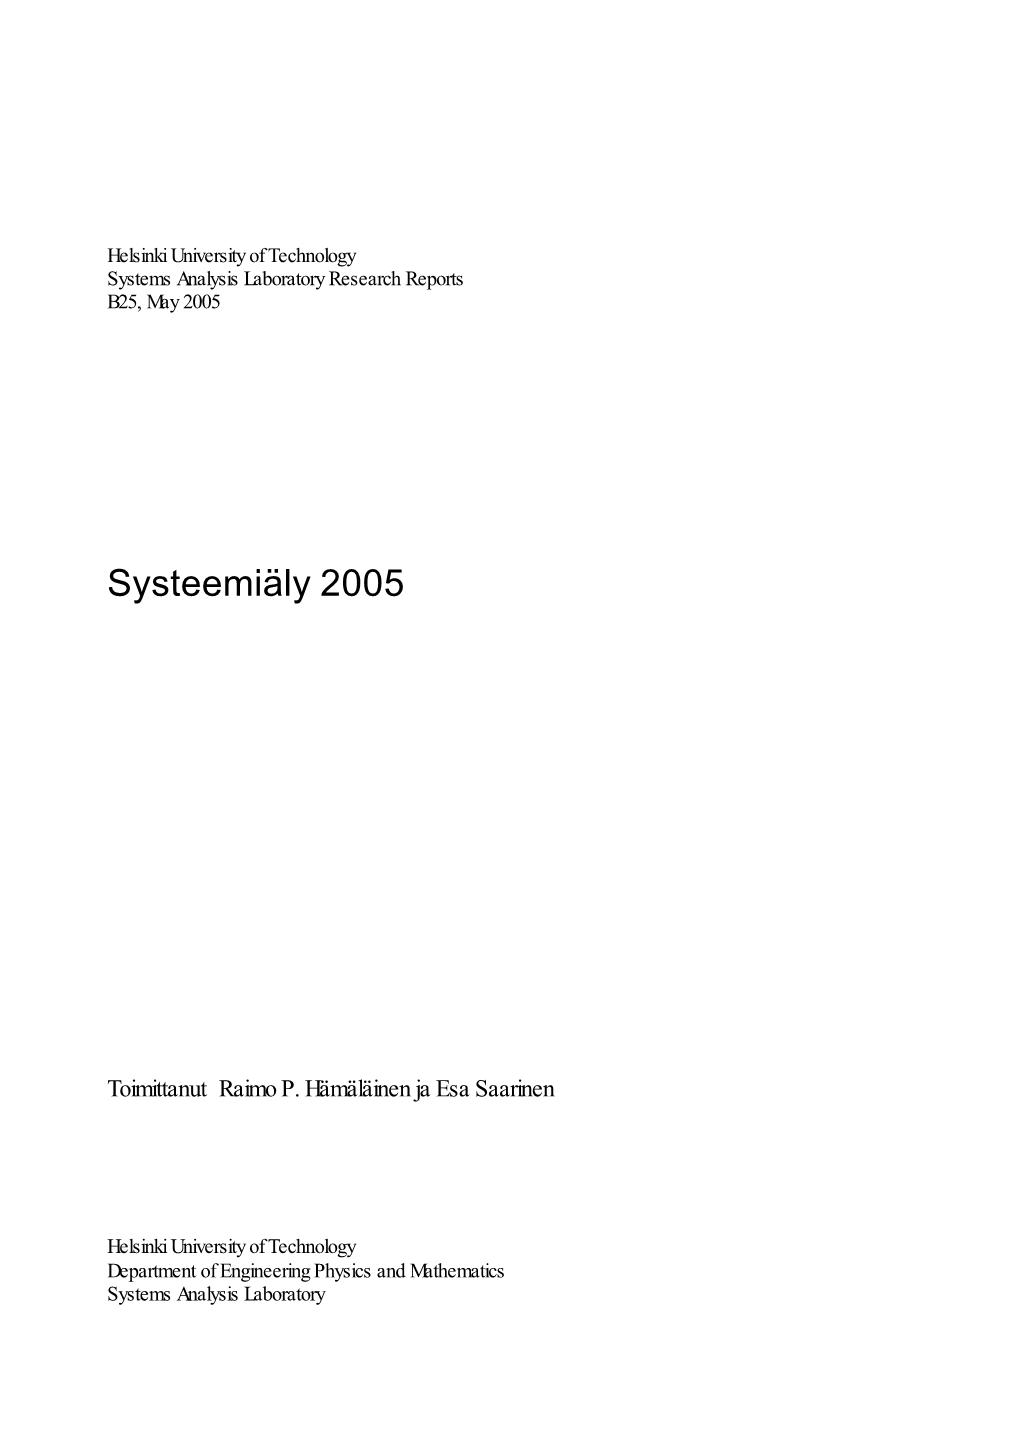 Systeemiäly 2005